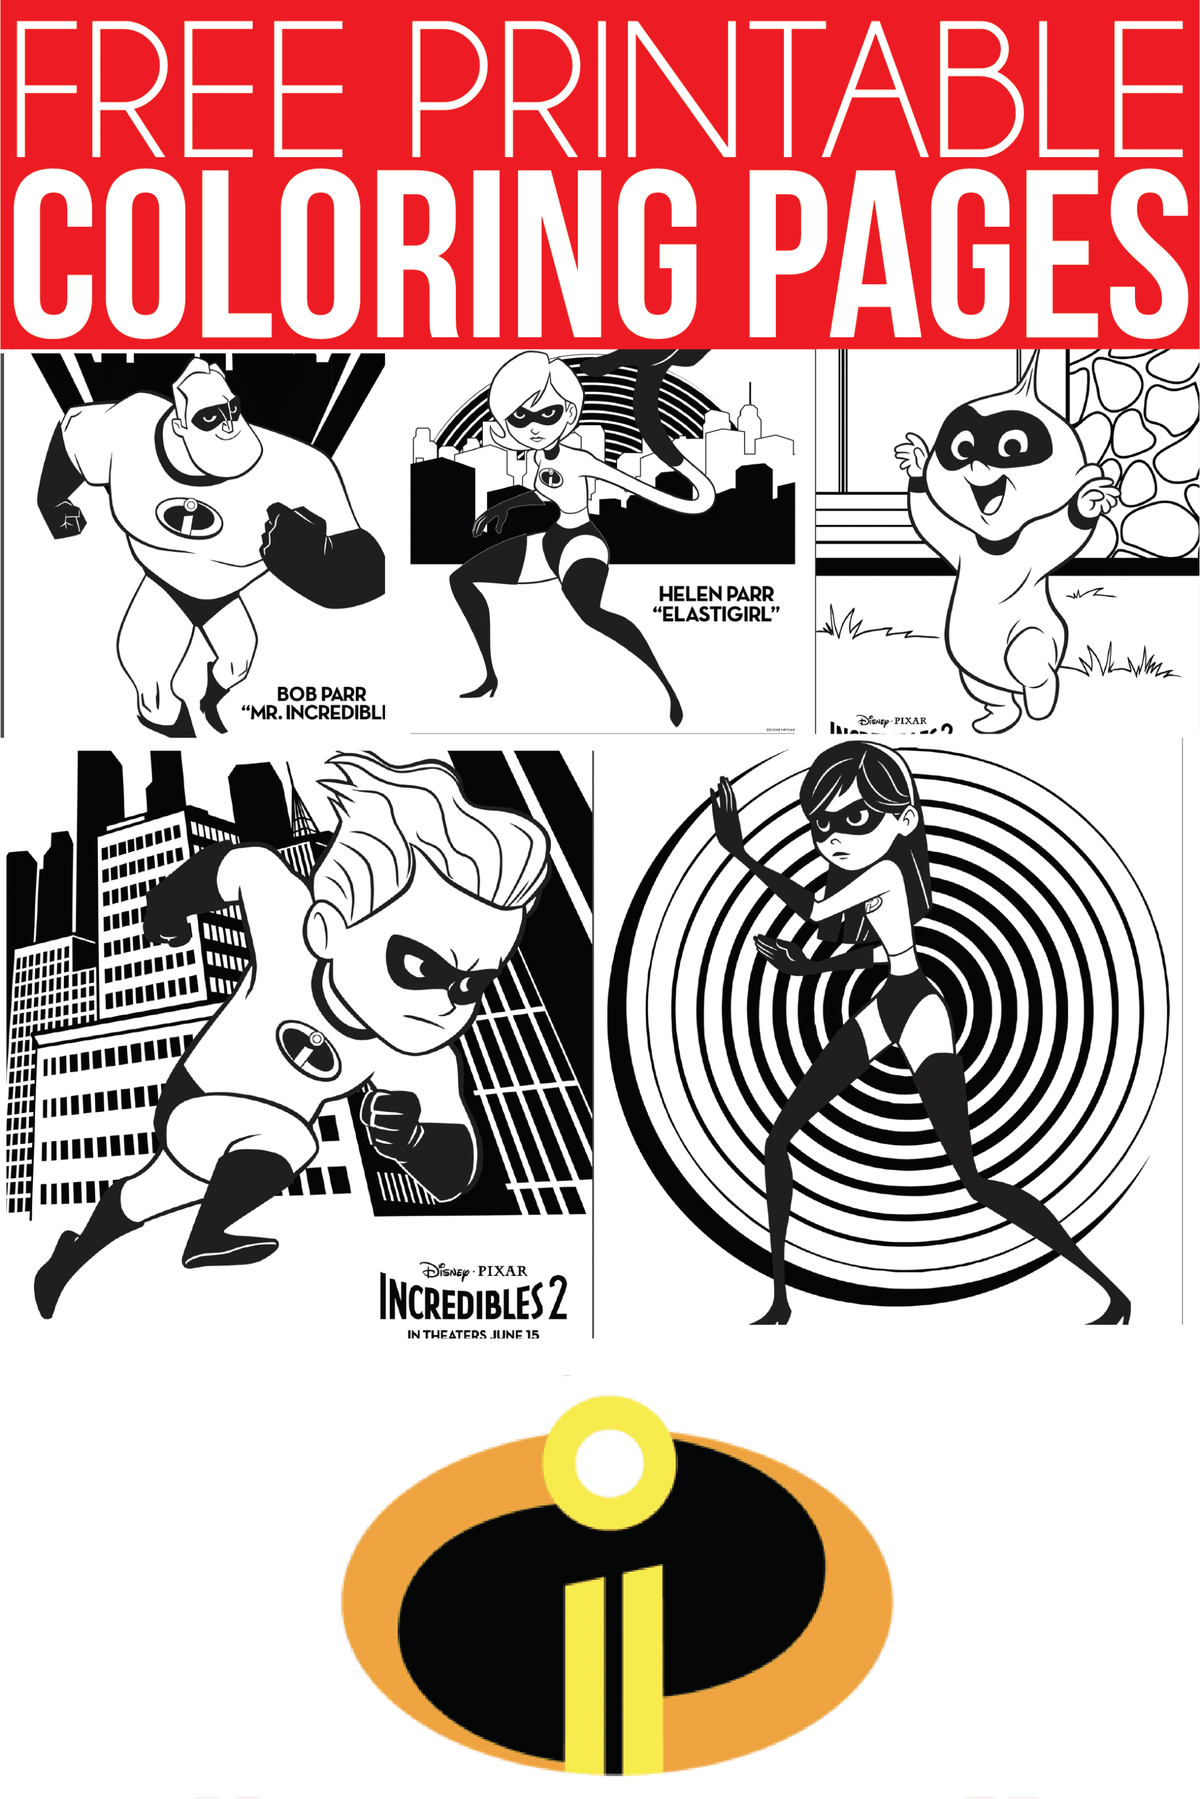 Incredibles 2 หน้าสีแผ่นกิจกรรมและความสนุกสนานในครอบครัวสำหรับคนรักดิสนีย์!